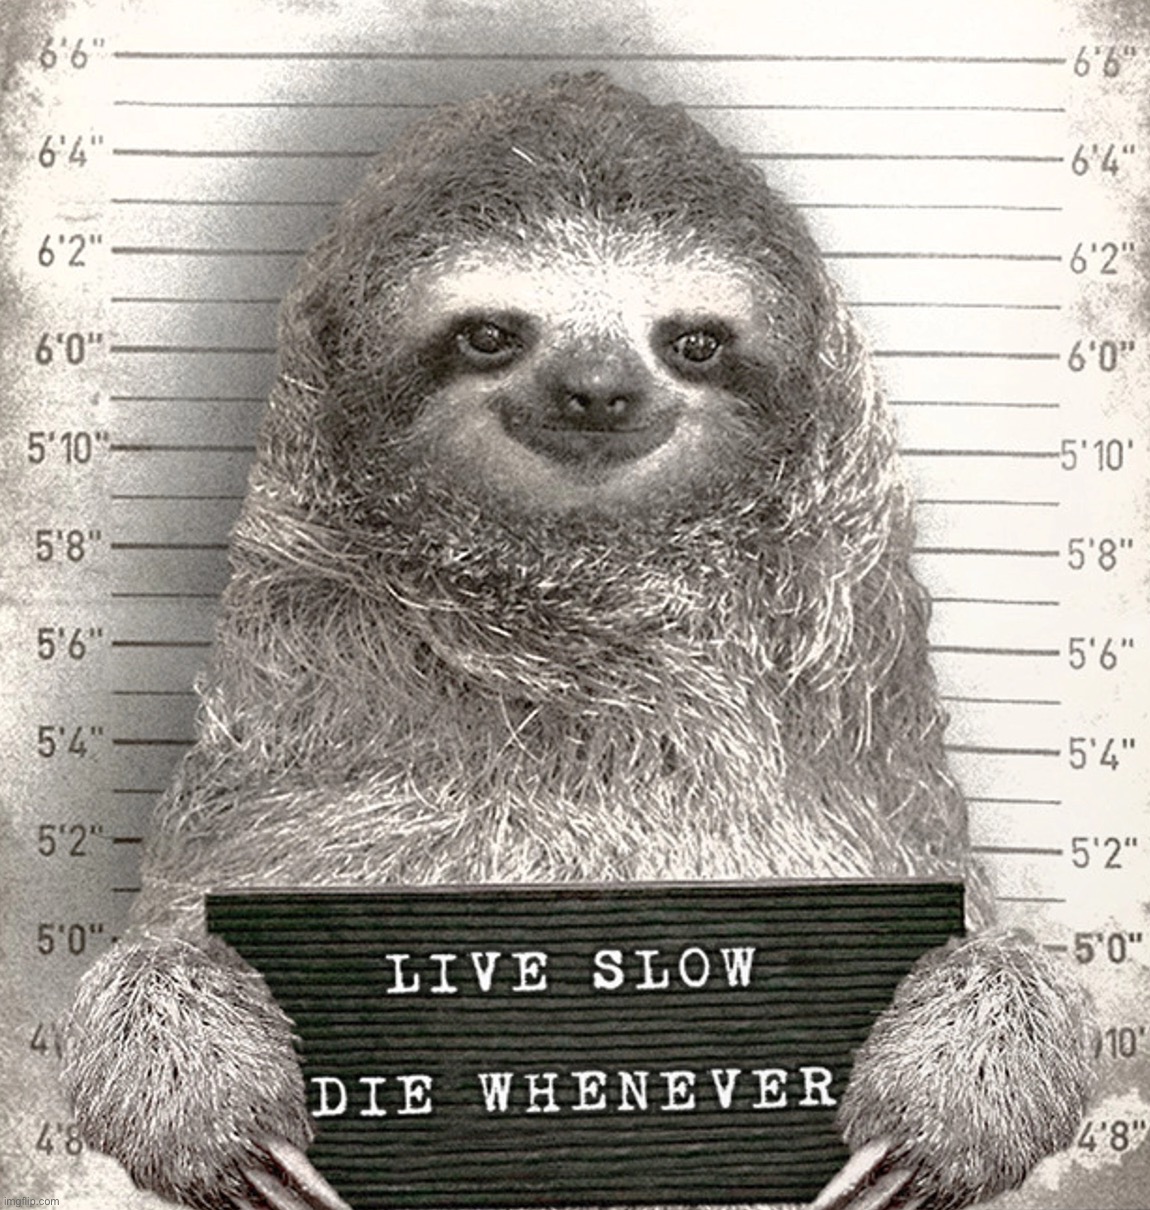 Sloth mugshot | image tagged in sloth mugshot | made w/ Imgflip meme maker